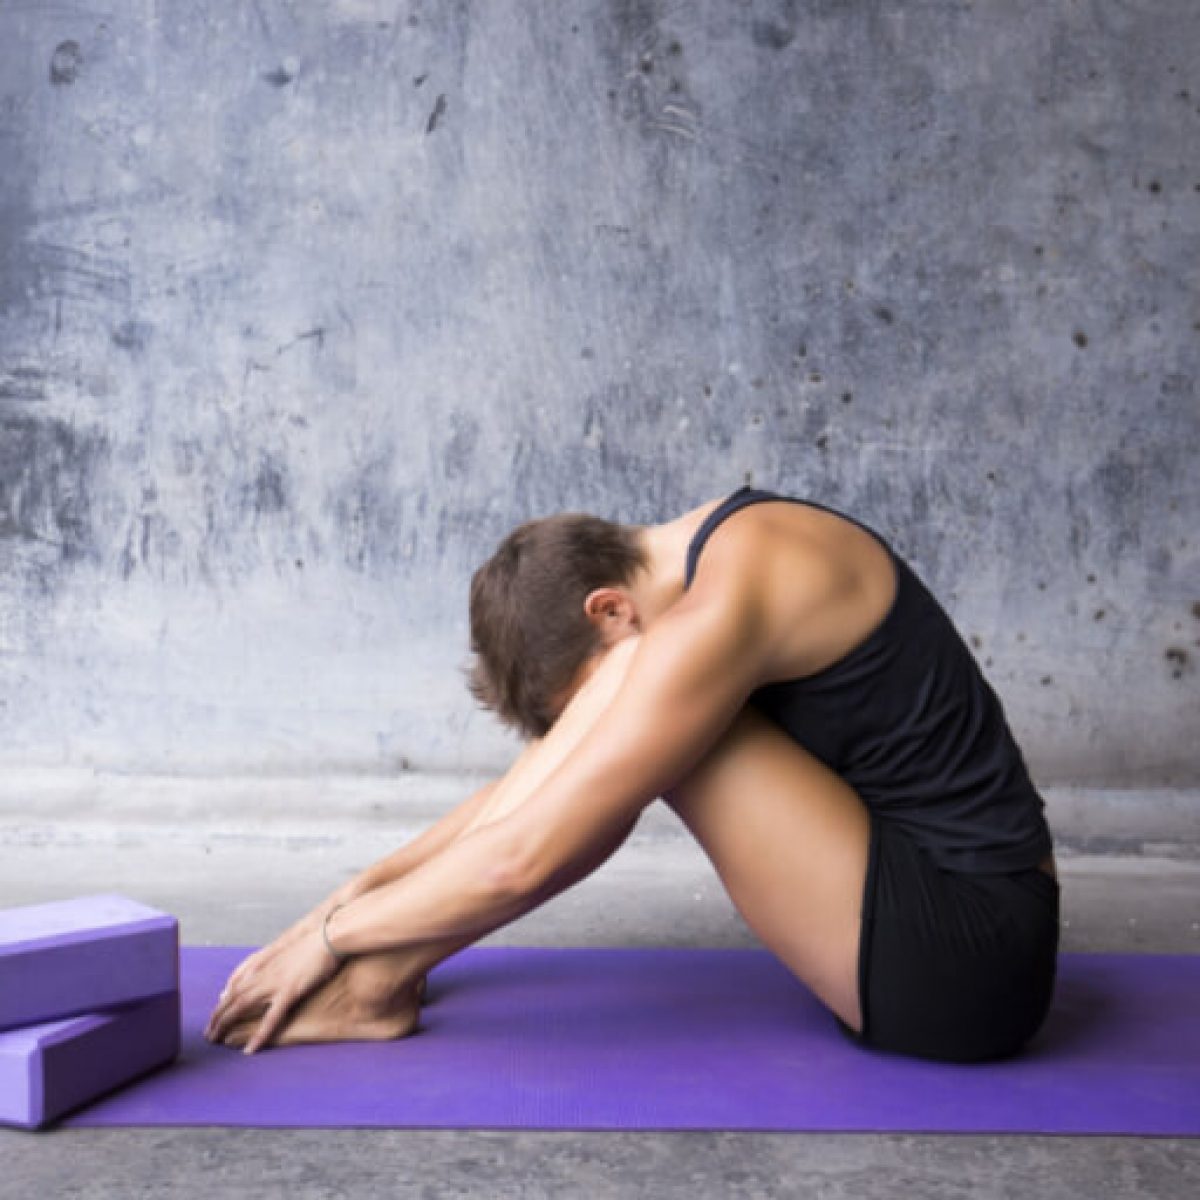 Yoga Poses That Help Ease Depression